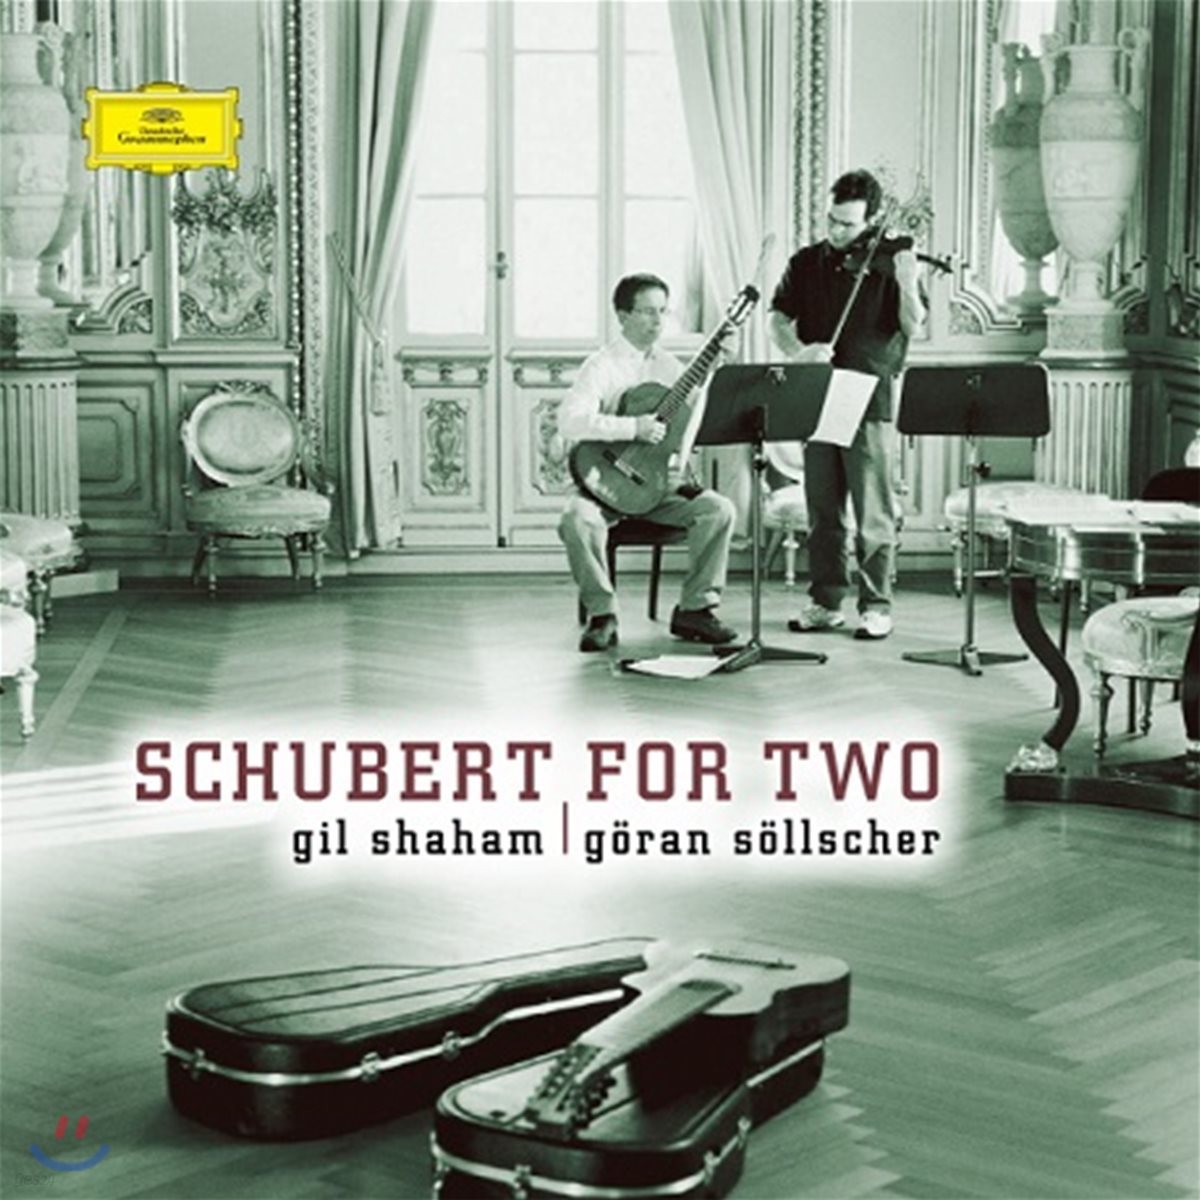 Gil Shaham / Goran Sollscher 슈베르트 포 투 - 길 샤함, 괴란 죌셔 (Schubert For Two)[2LP] 